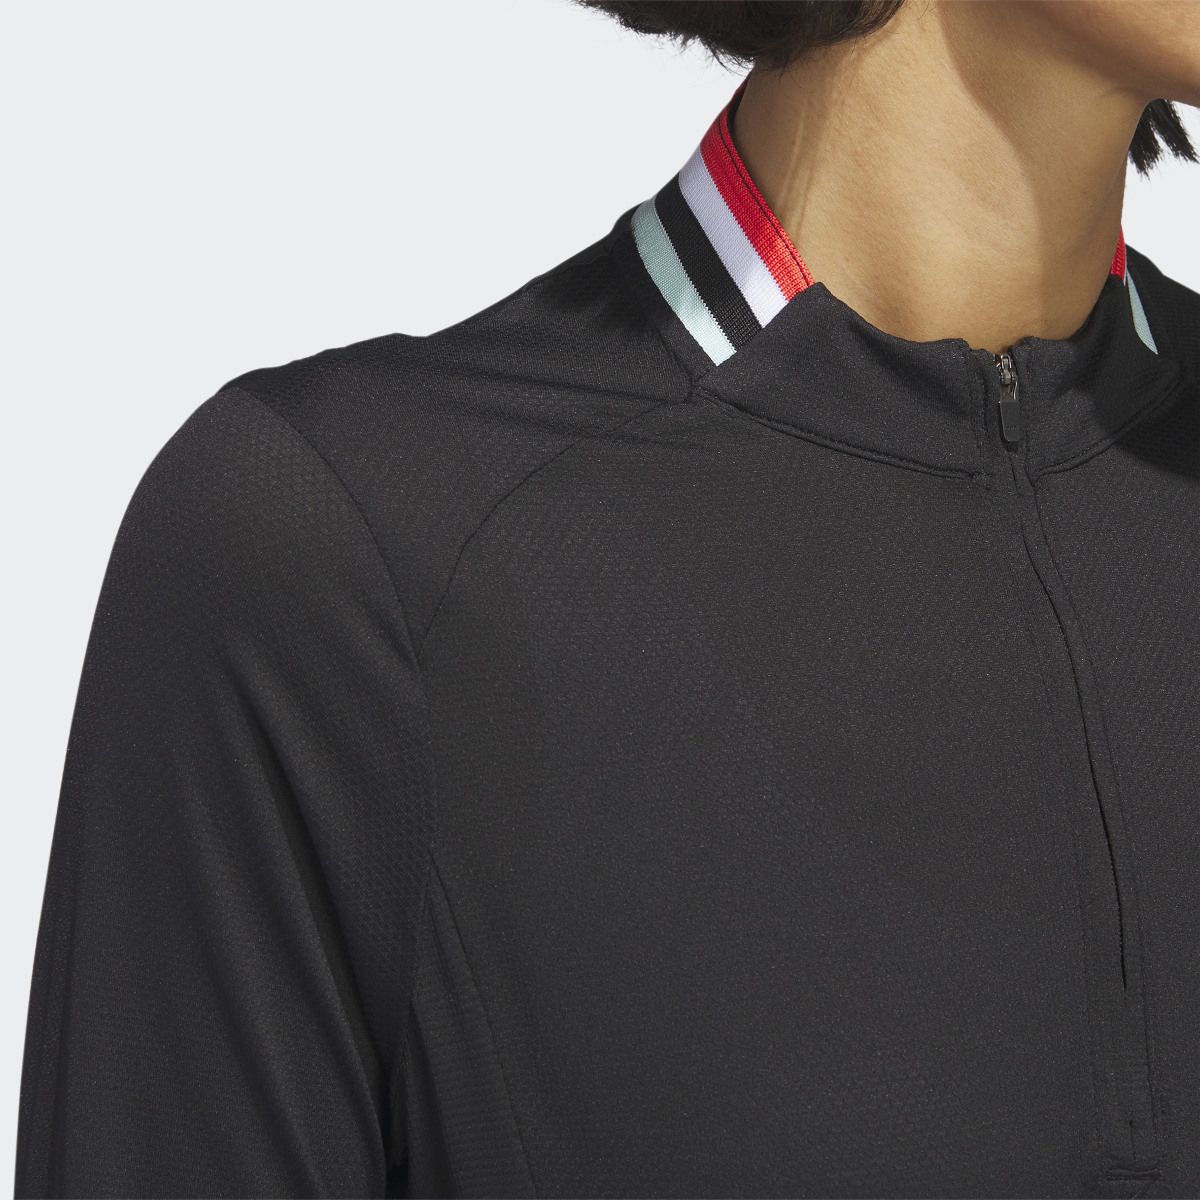 Adidas Ultimate365 Tour Long Sleeve Mock Polo Shirt. 9